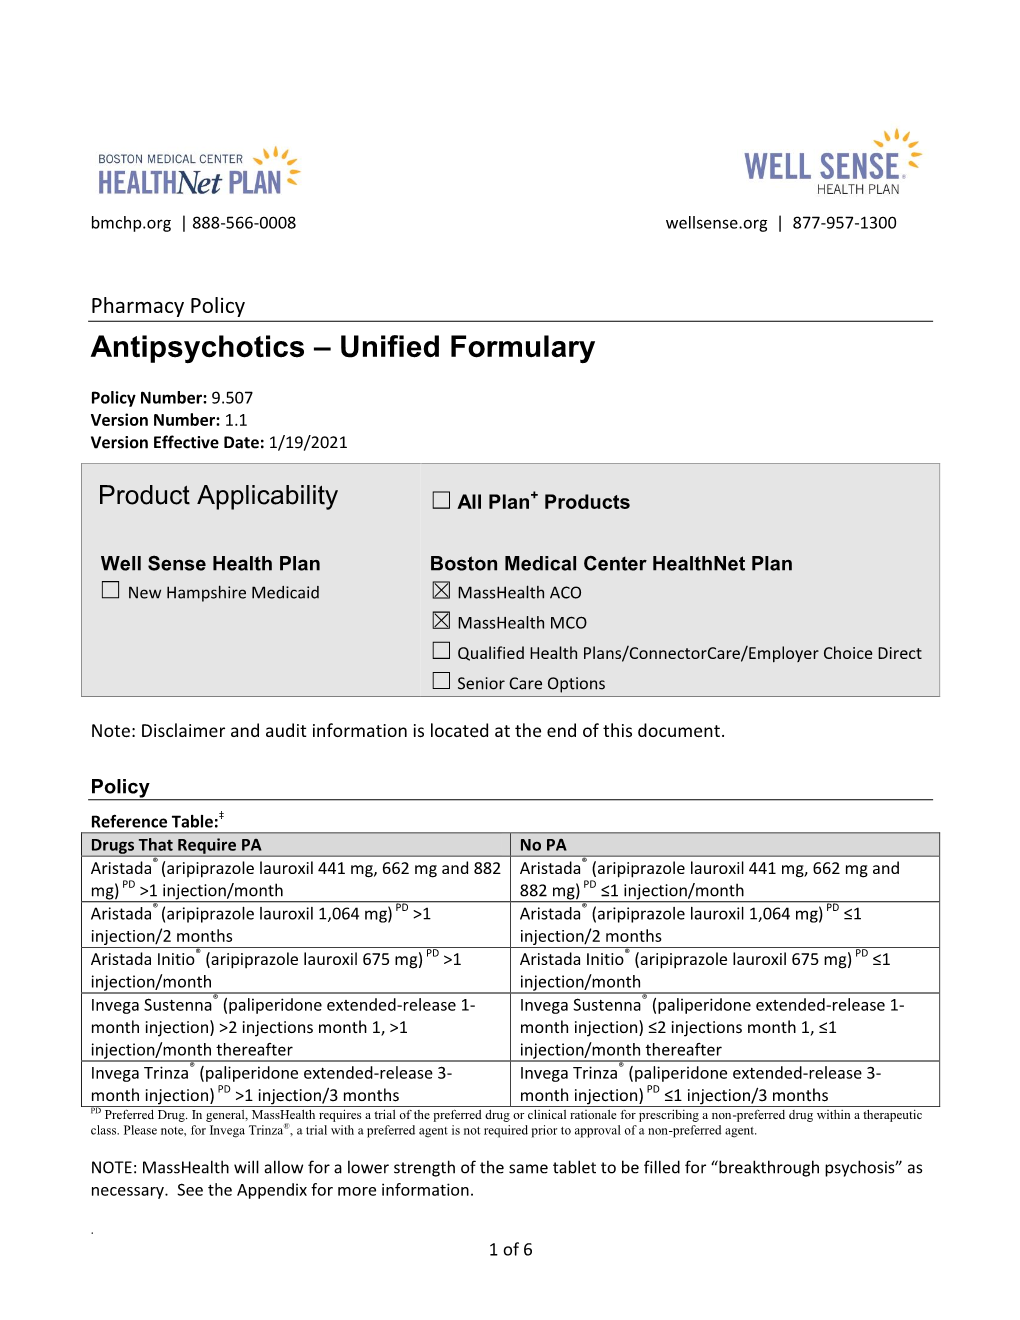 Antipsychotics – Unified Formulary